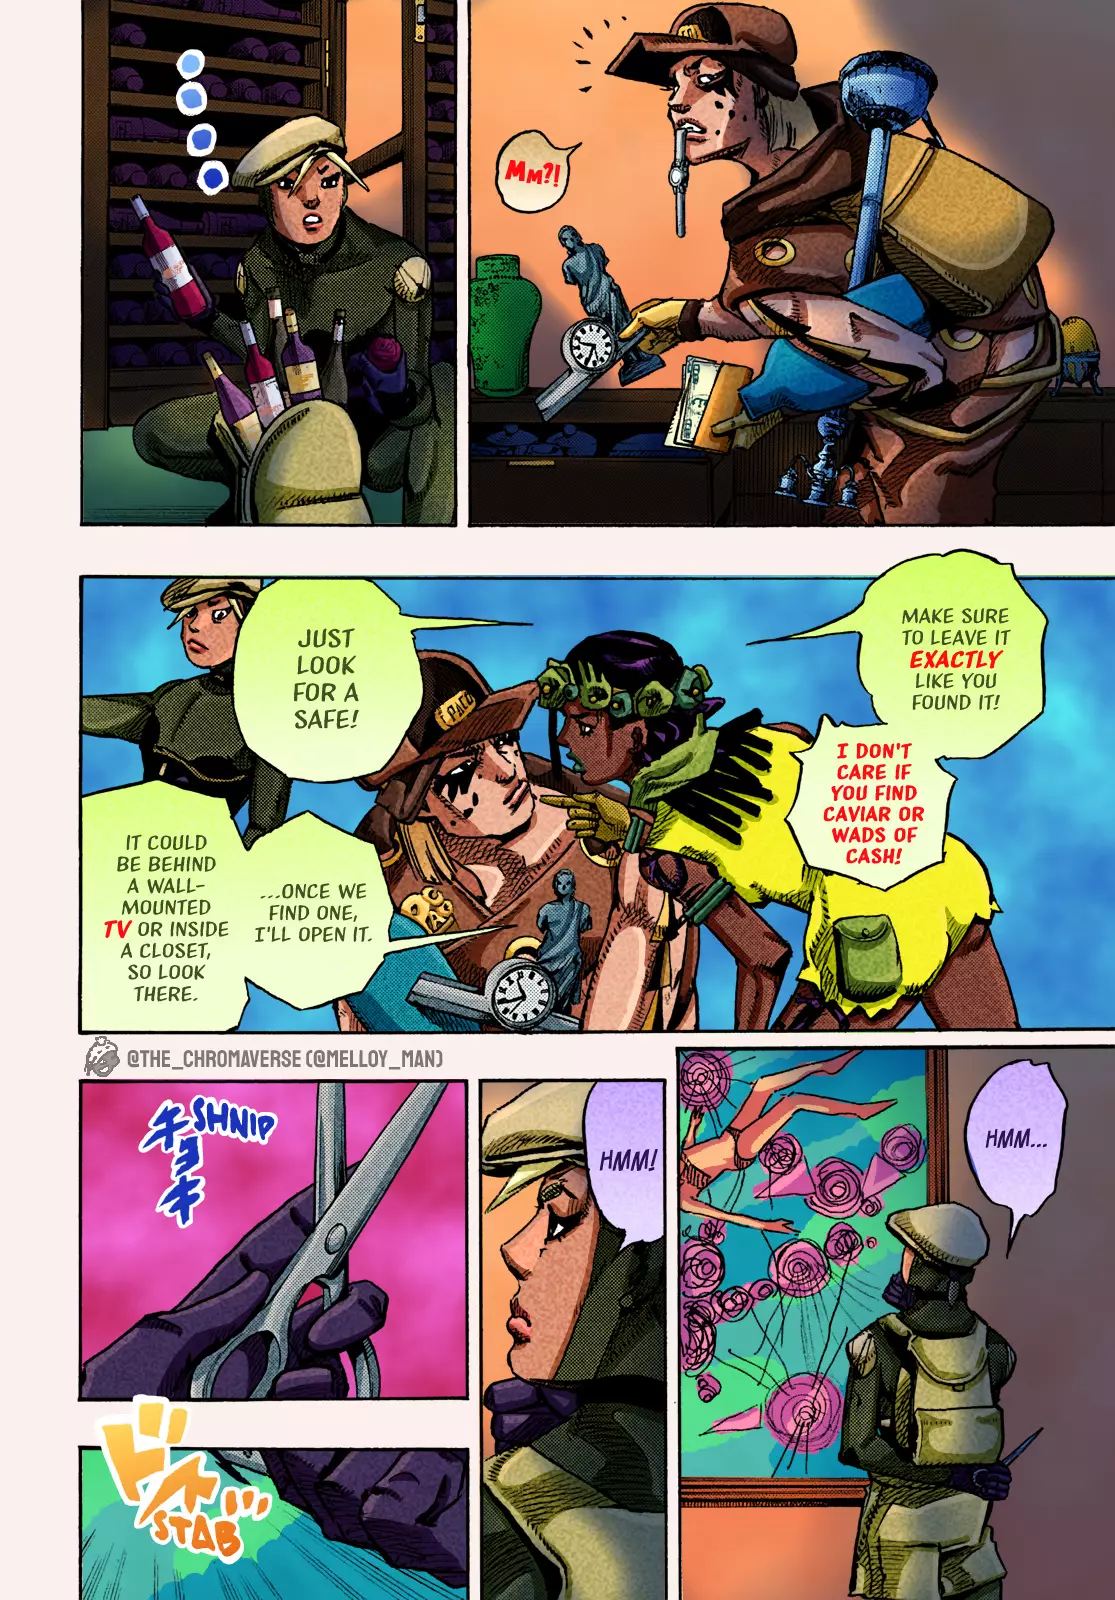 Jojo's Bizarre Adventure Part 9 - The Jojolands (Fan-Colored) - 3 page 8-4abd3453